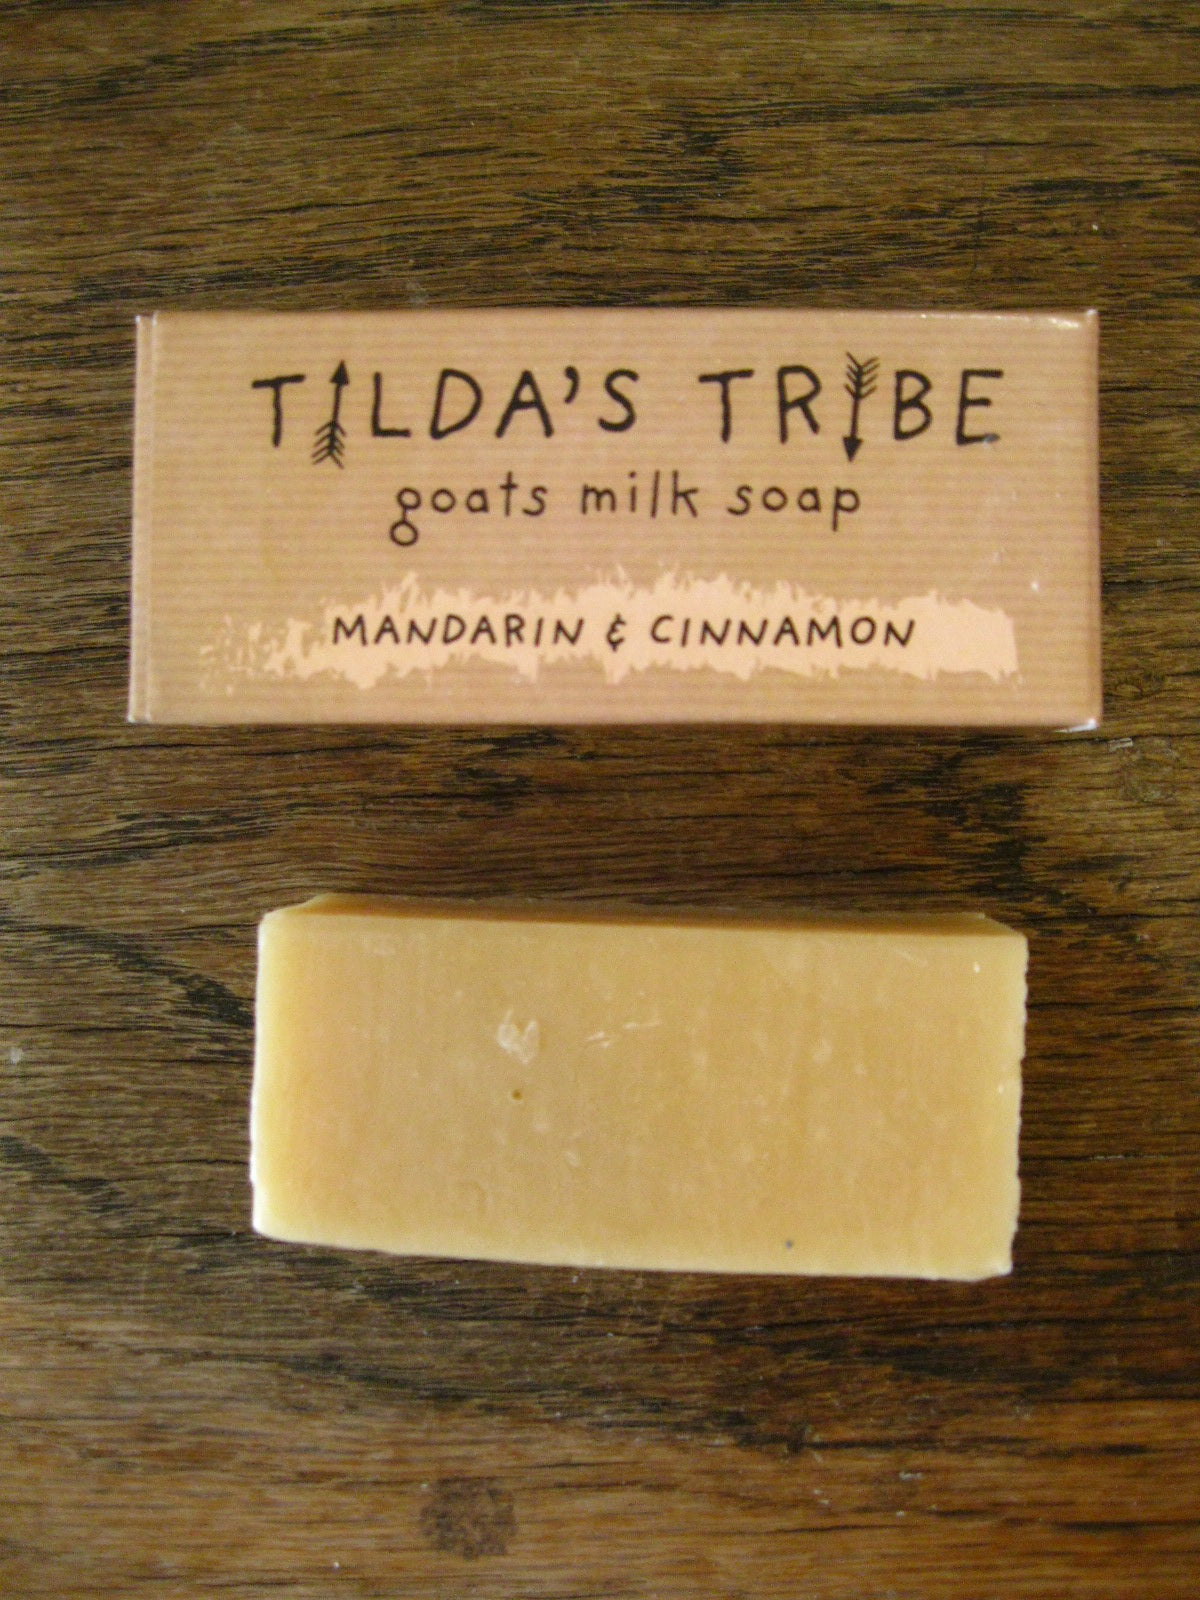 TILDA'S TRIBE GOATS MILK SOAP